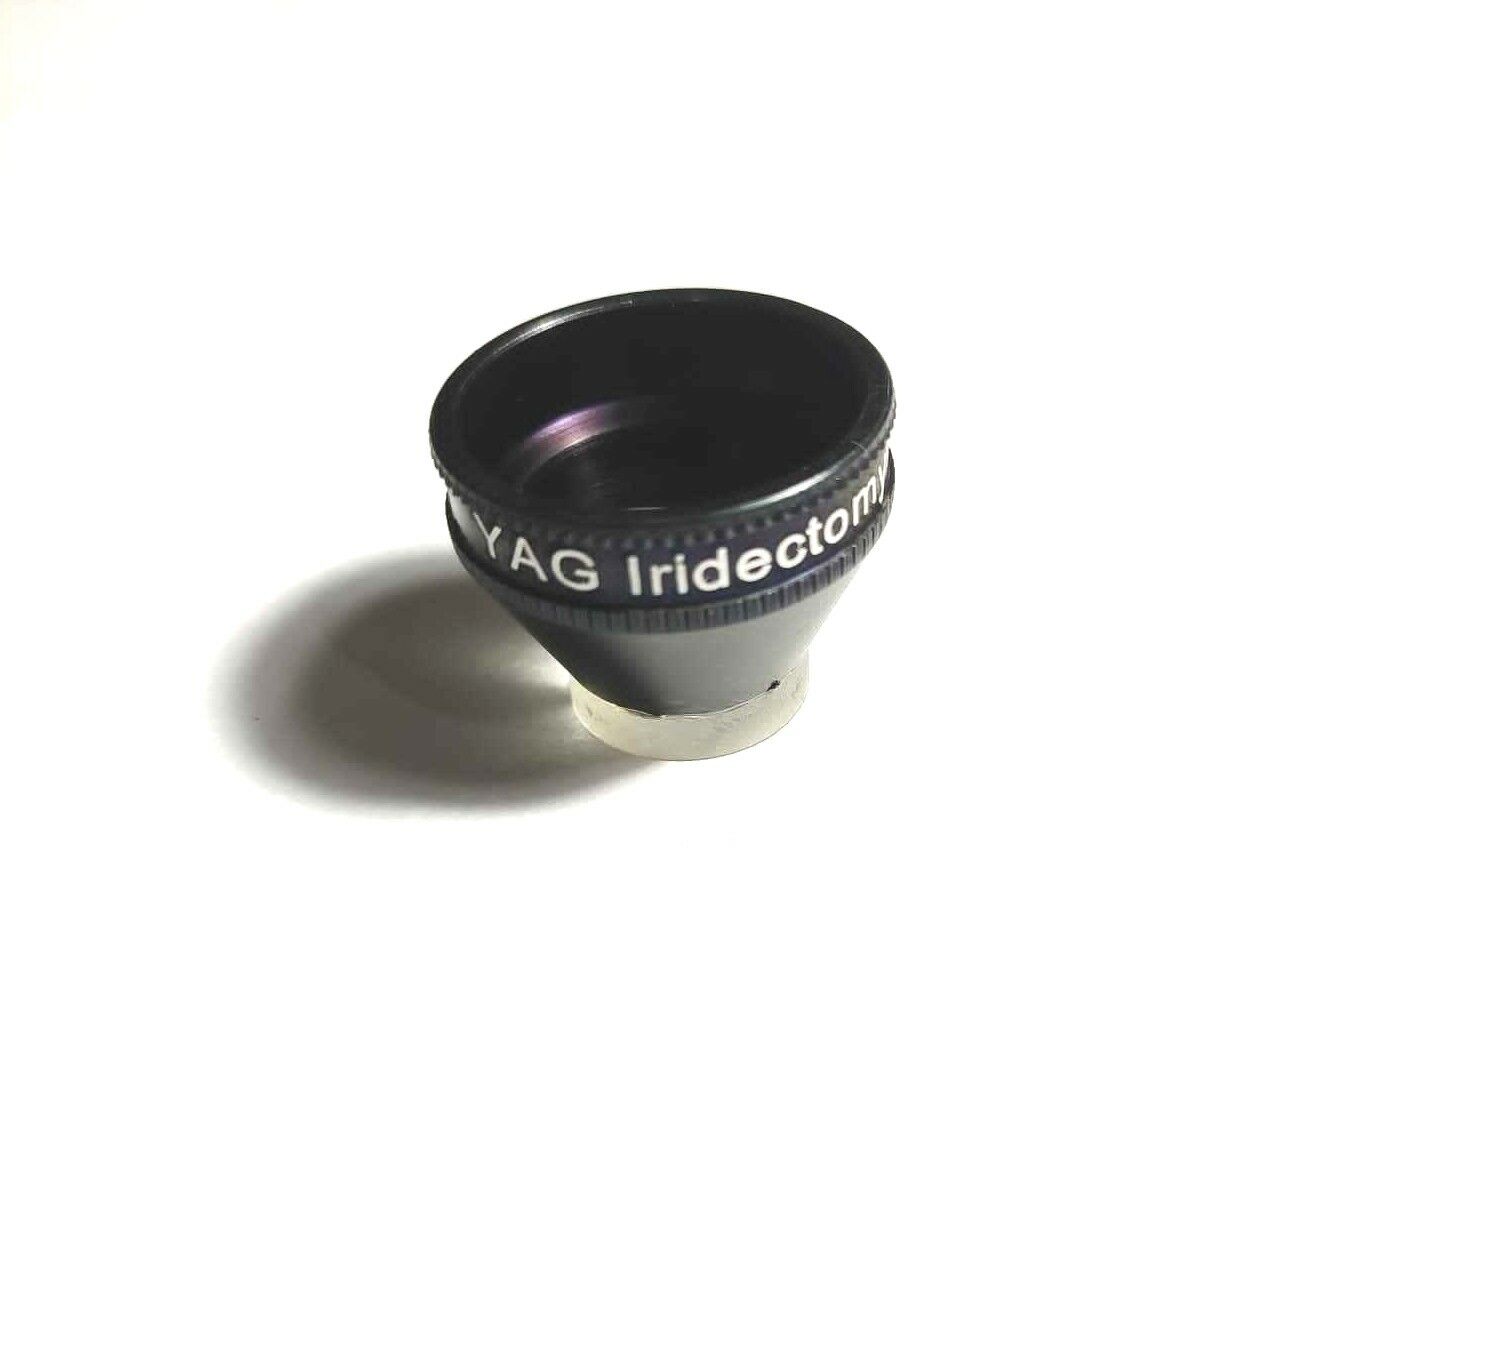 Original Yag Iridectomy Lens For Yag Laser Surgery